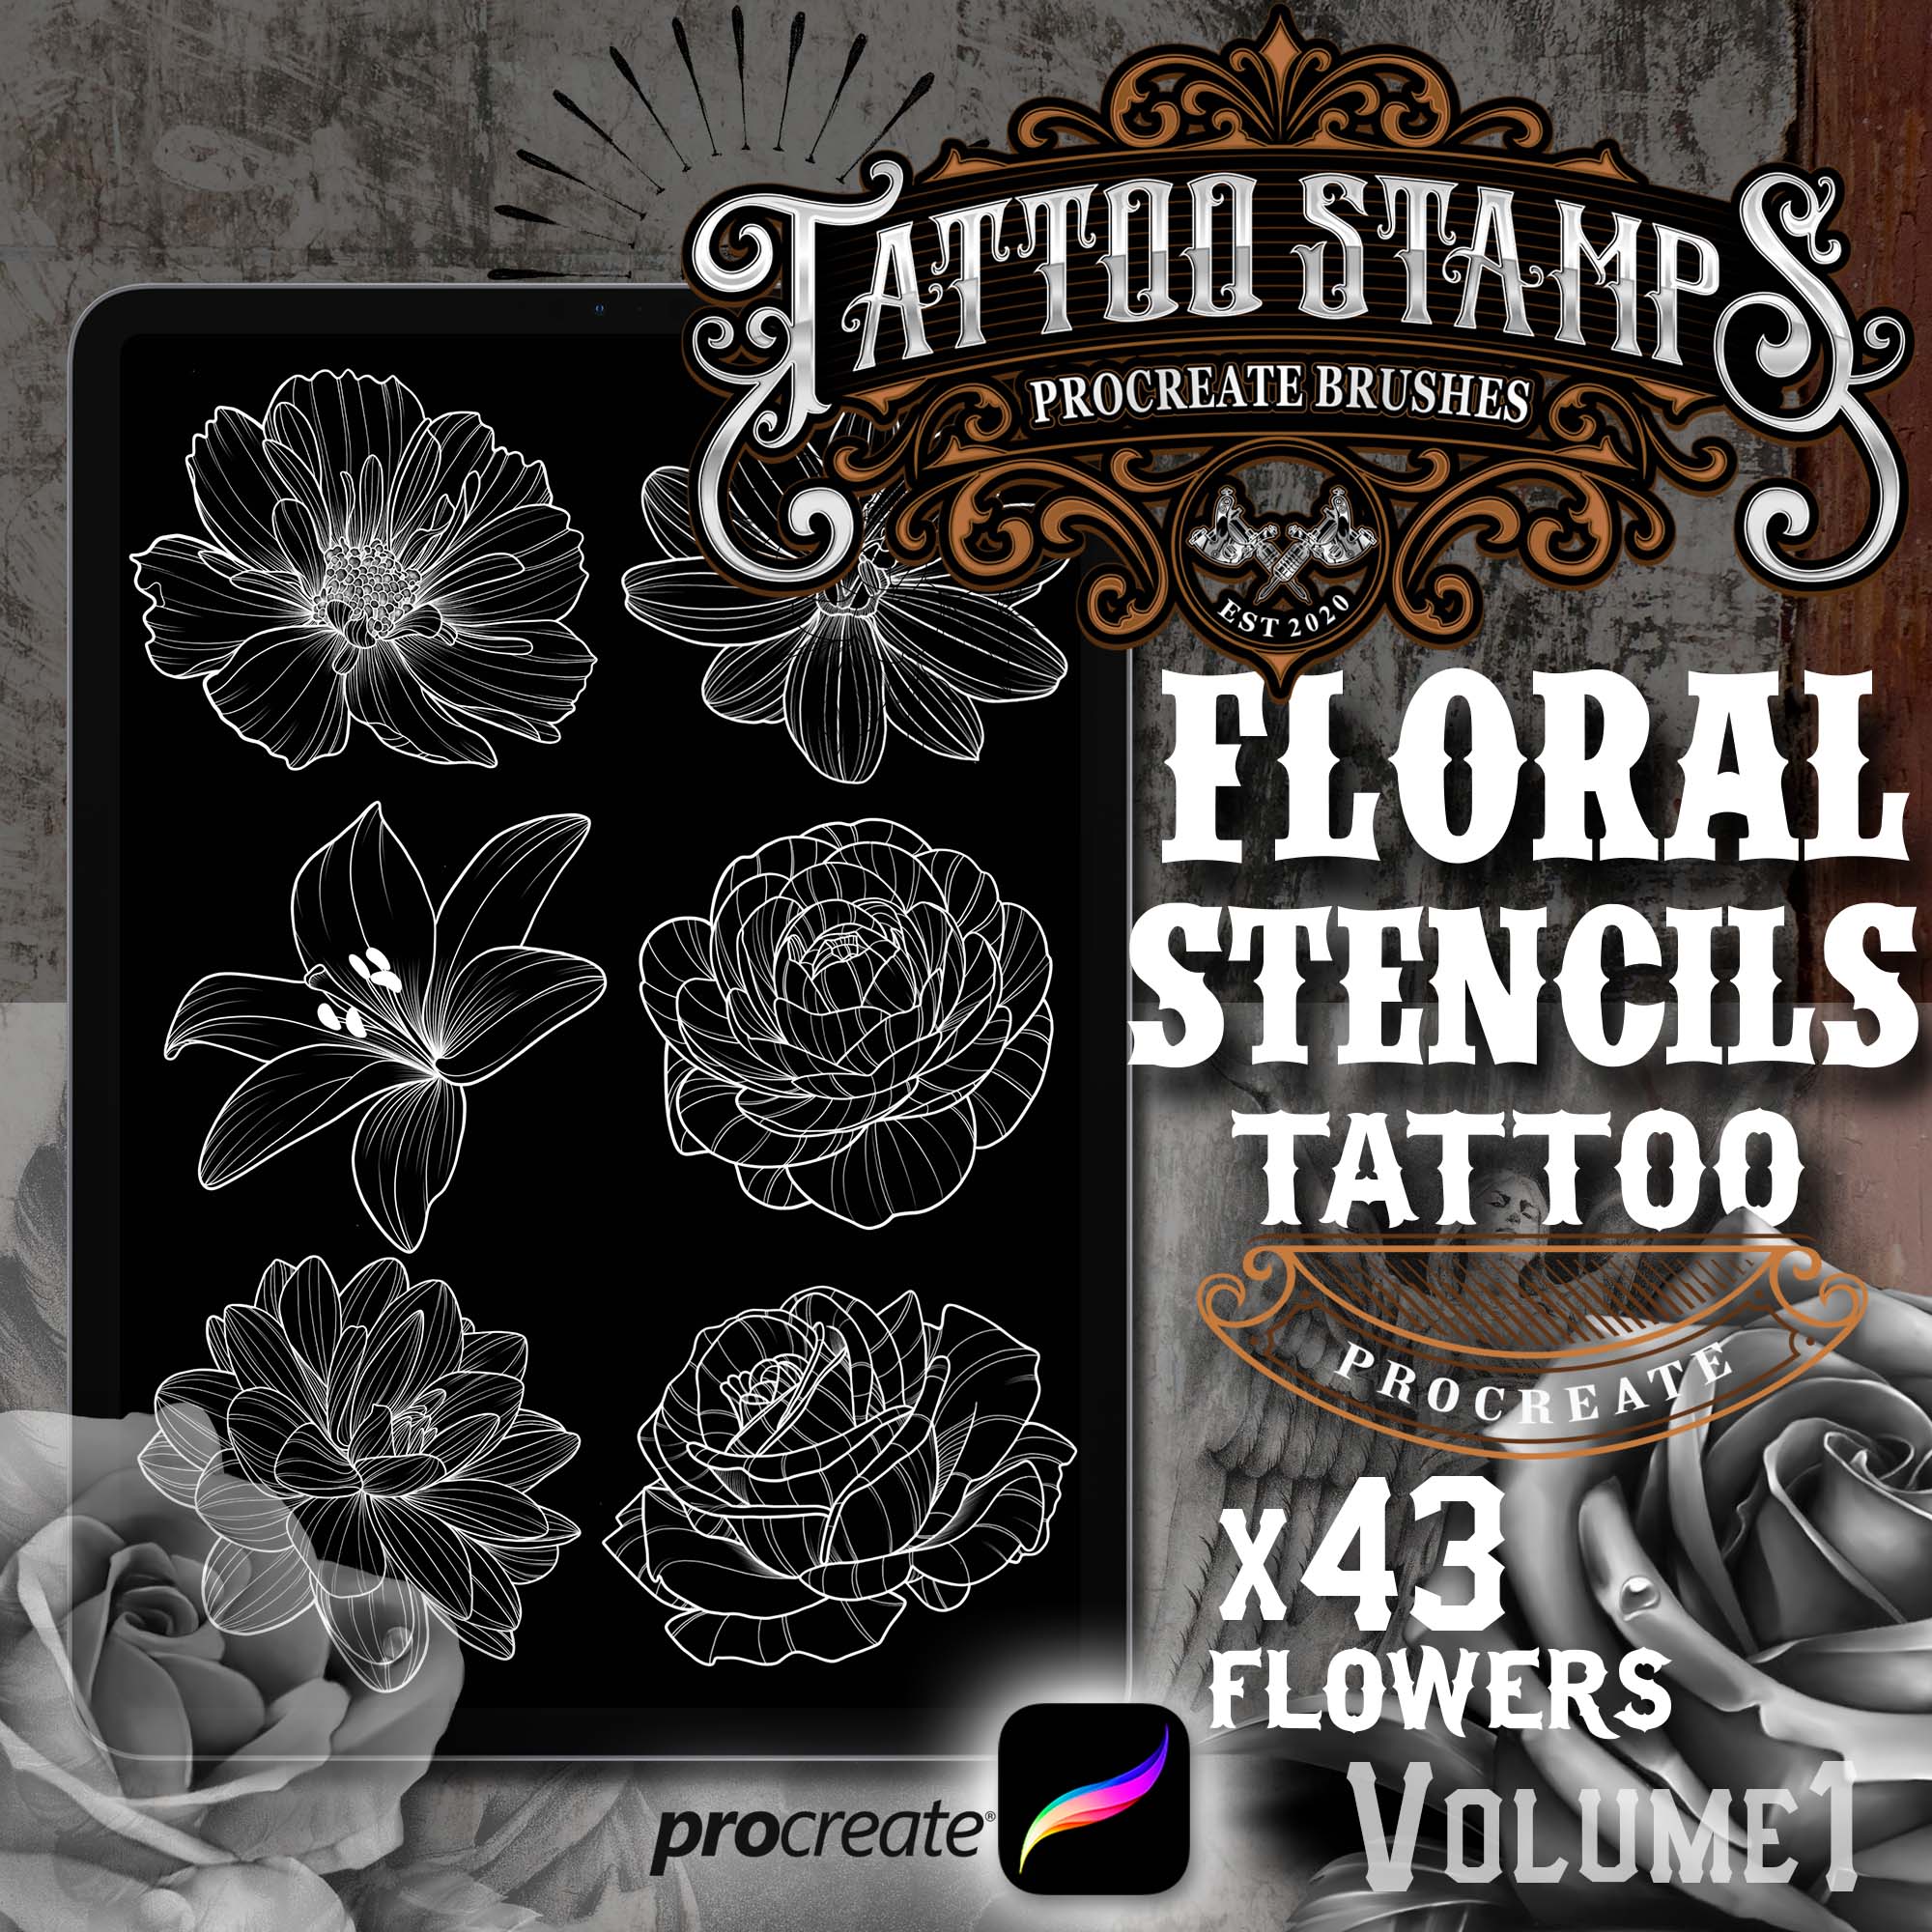 Tattoo Pro Stencils Series 1 - Koi & Lotus : Amazon.in: Home & Kitchen